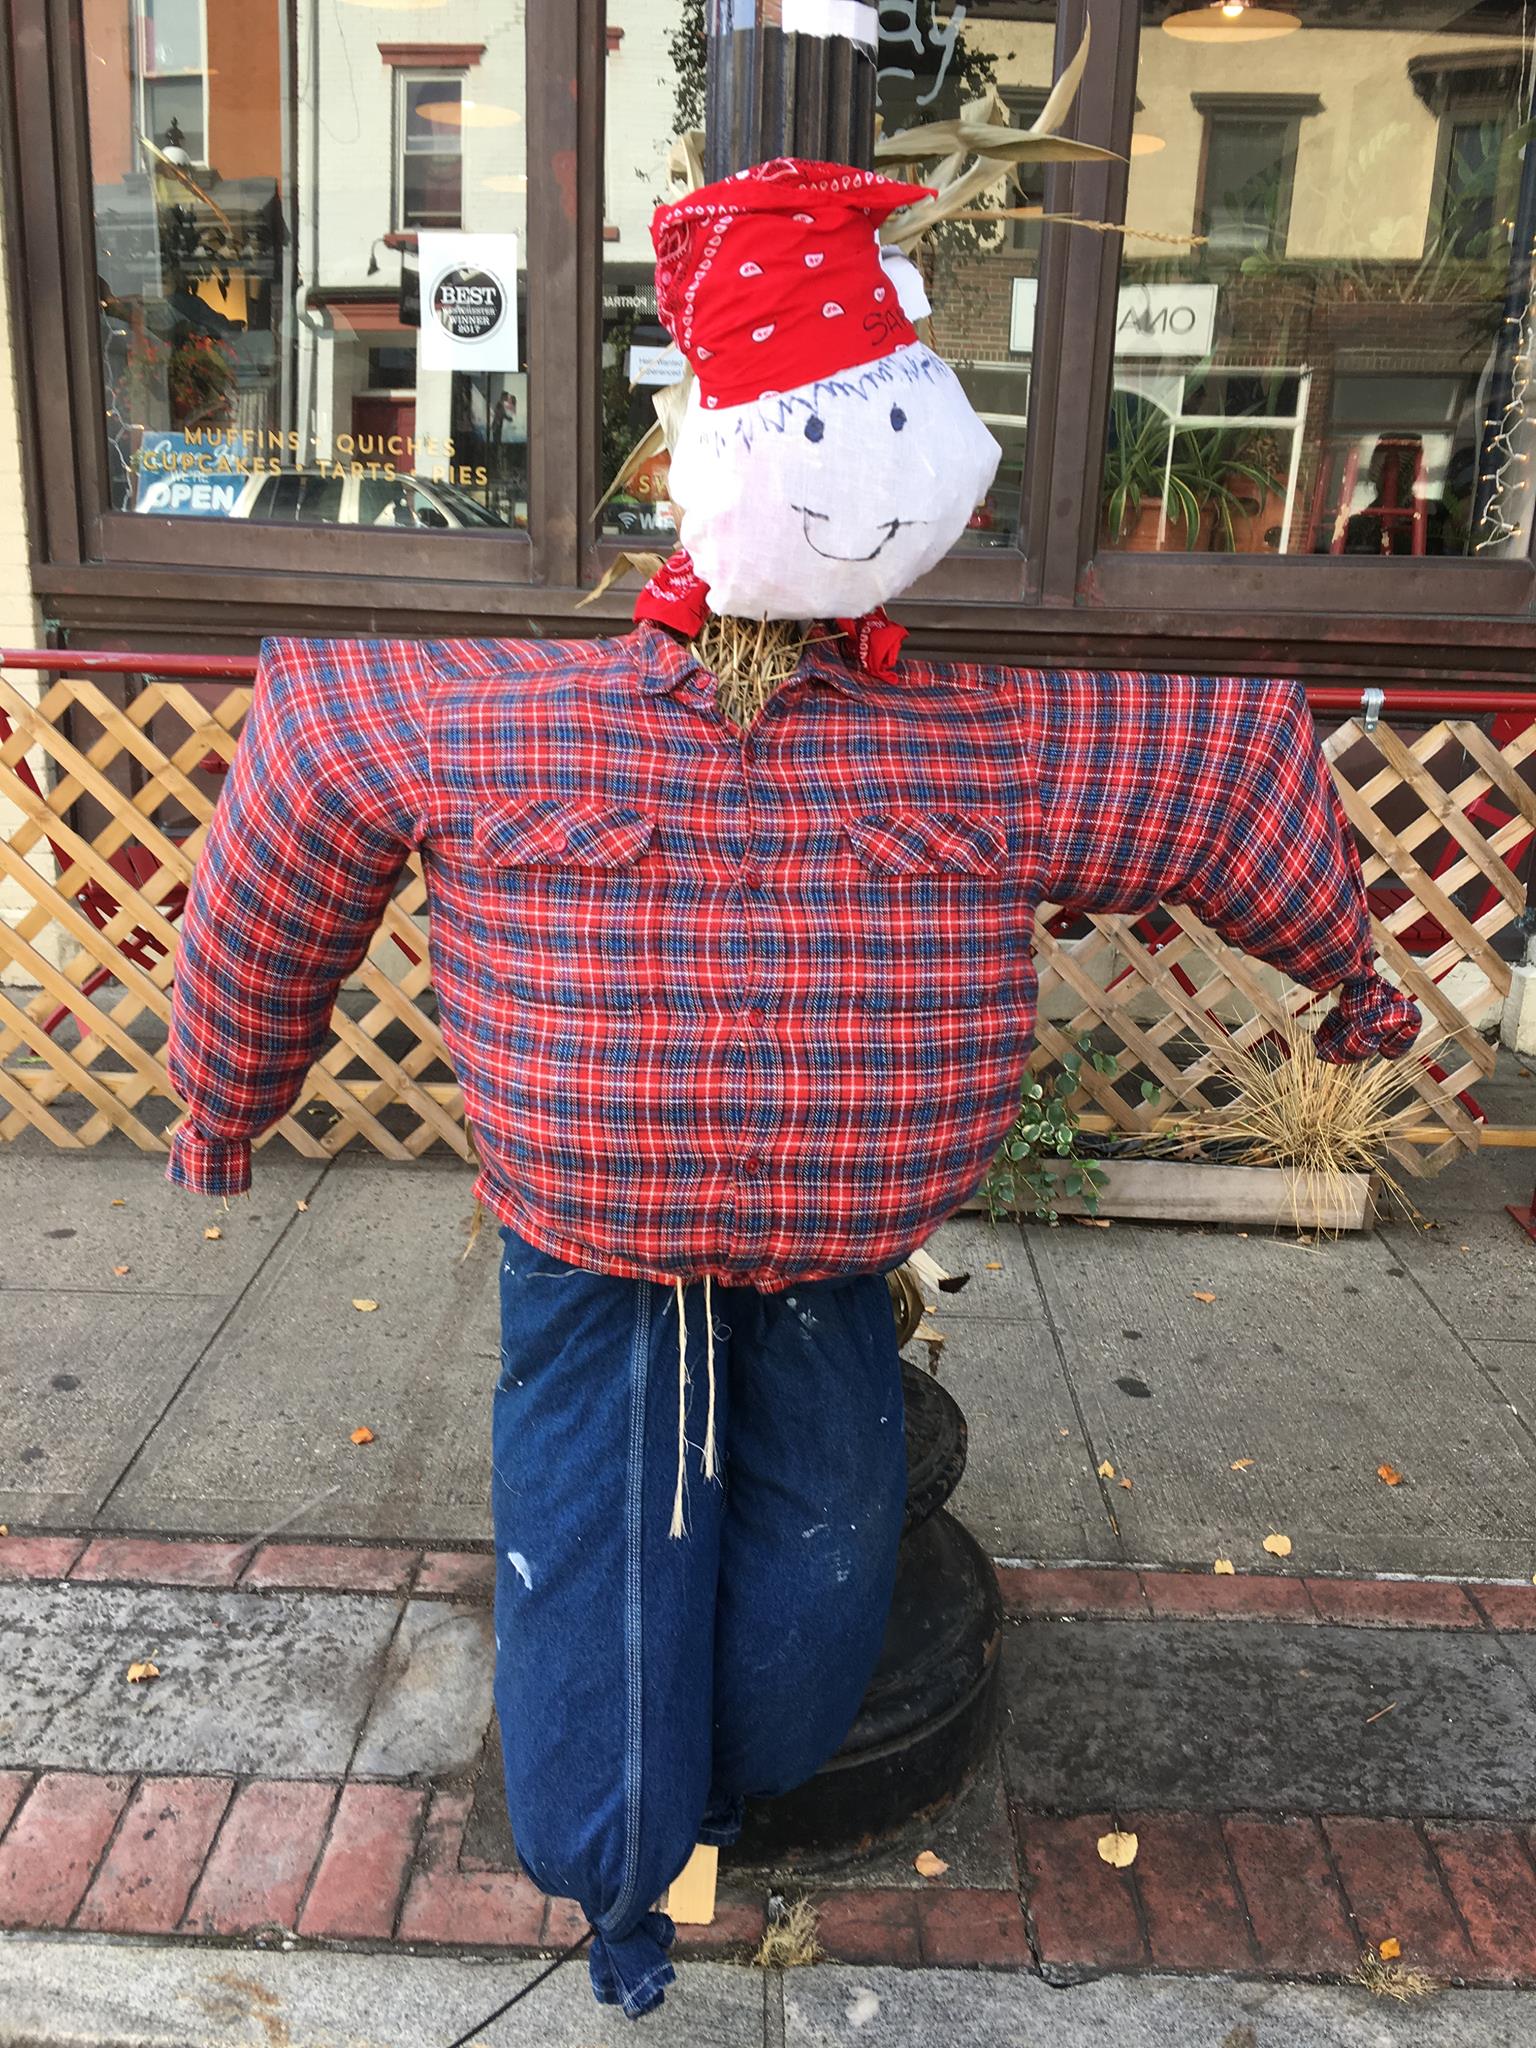 downtowntarryscarecrow